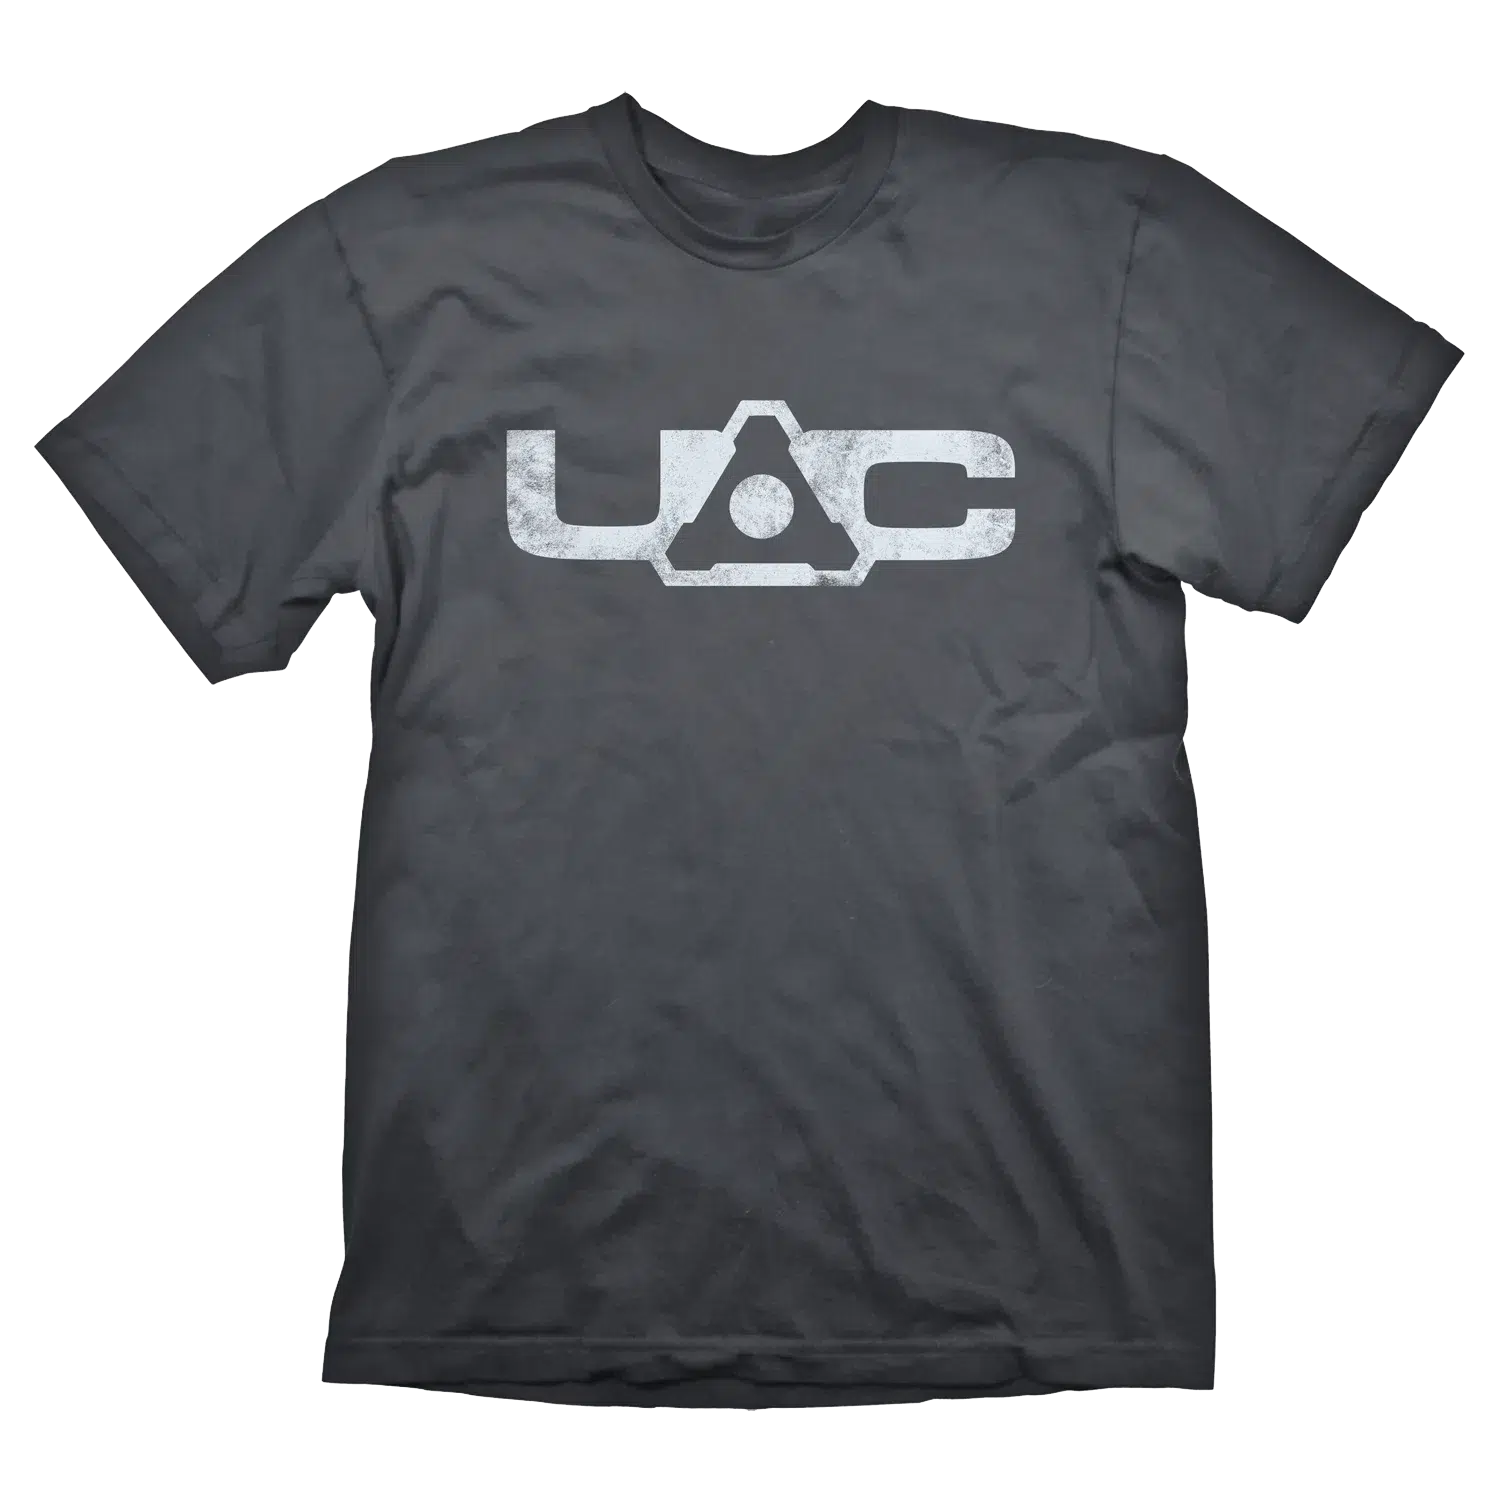 DOOM Eternal T-Shirt "UAC Logo" Grey XL